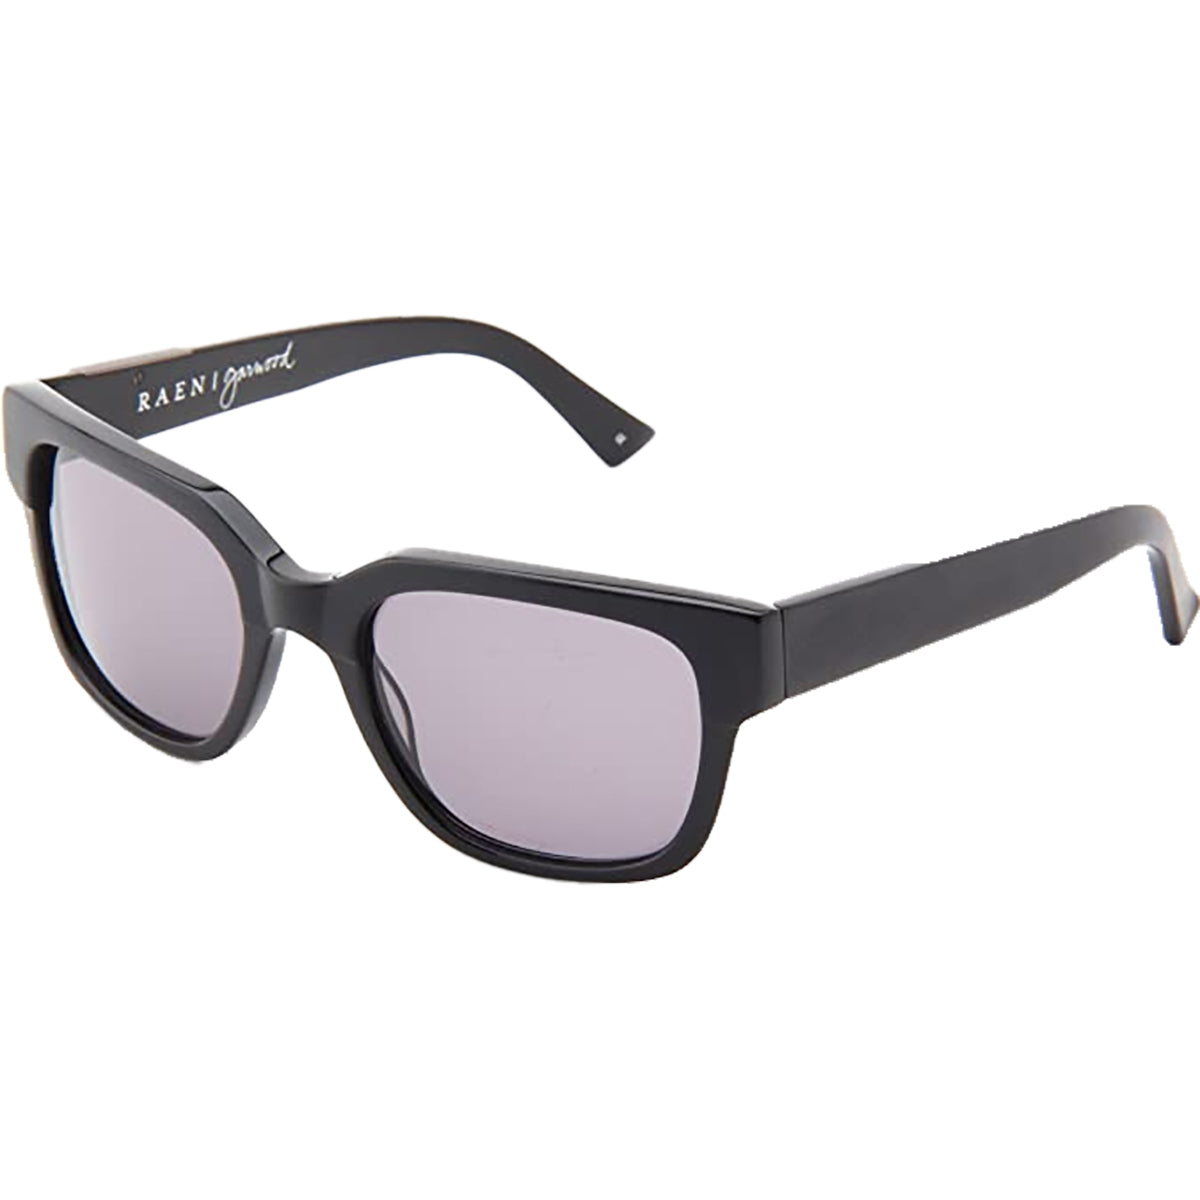 Raen Garwood Wayfarer Men's Lifestyle Sunglasses-GAR-018-MBK-SMK